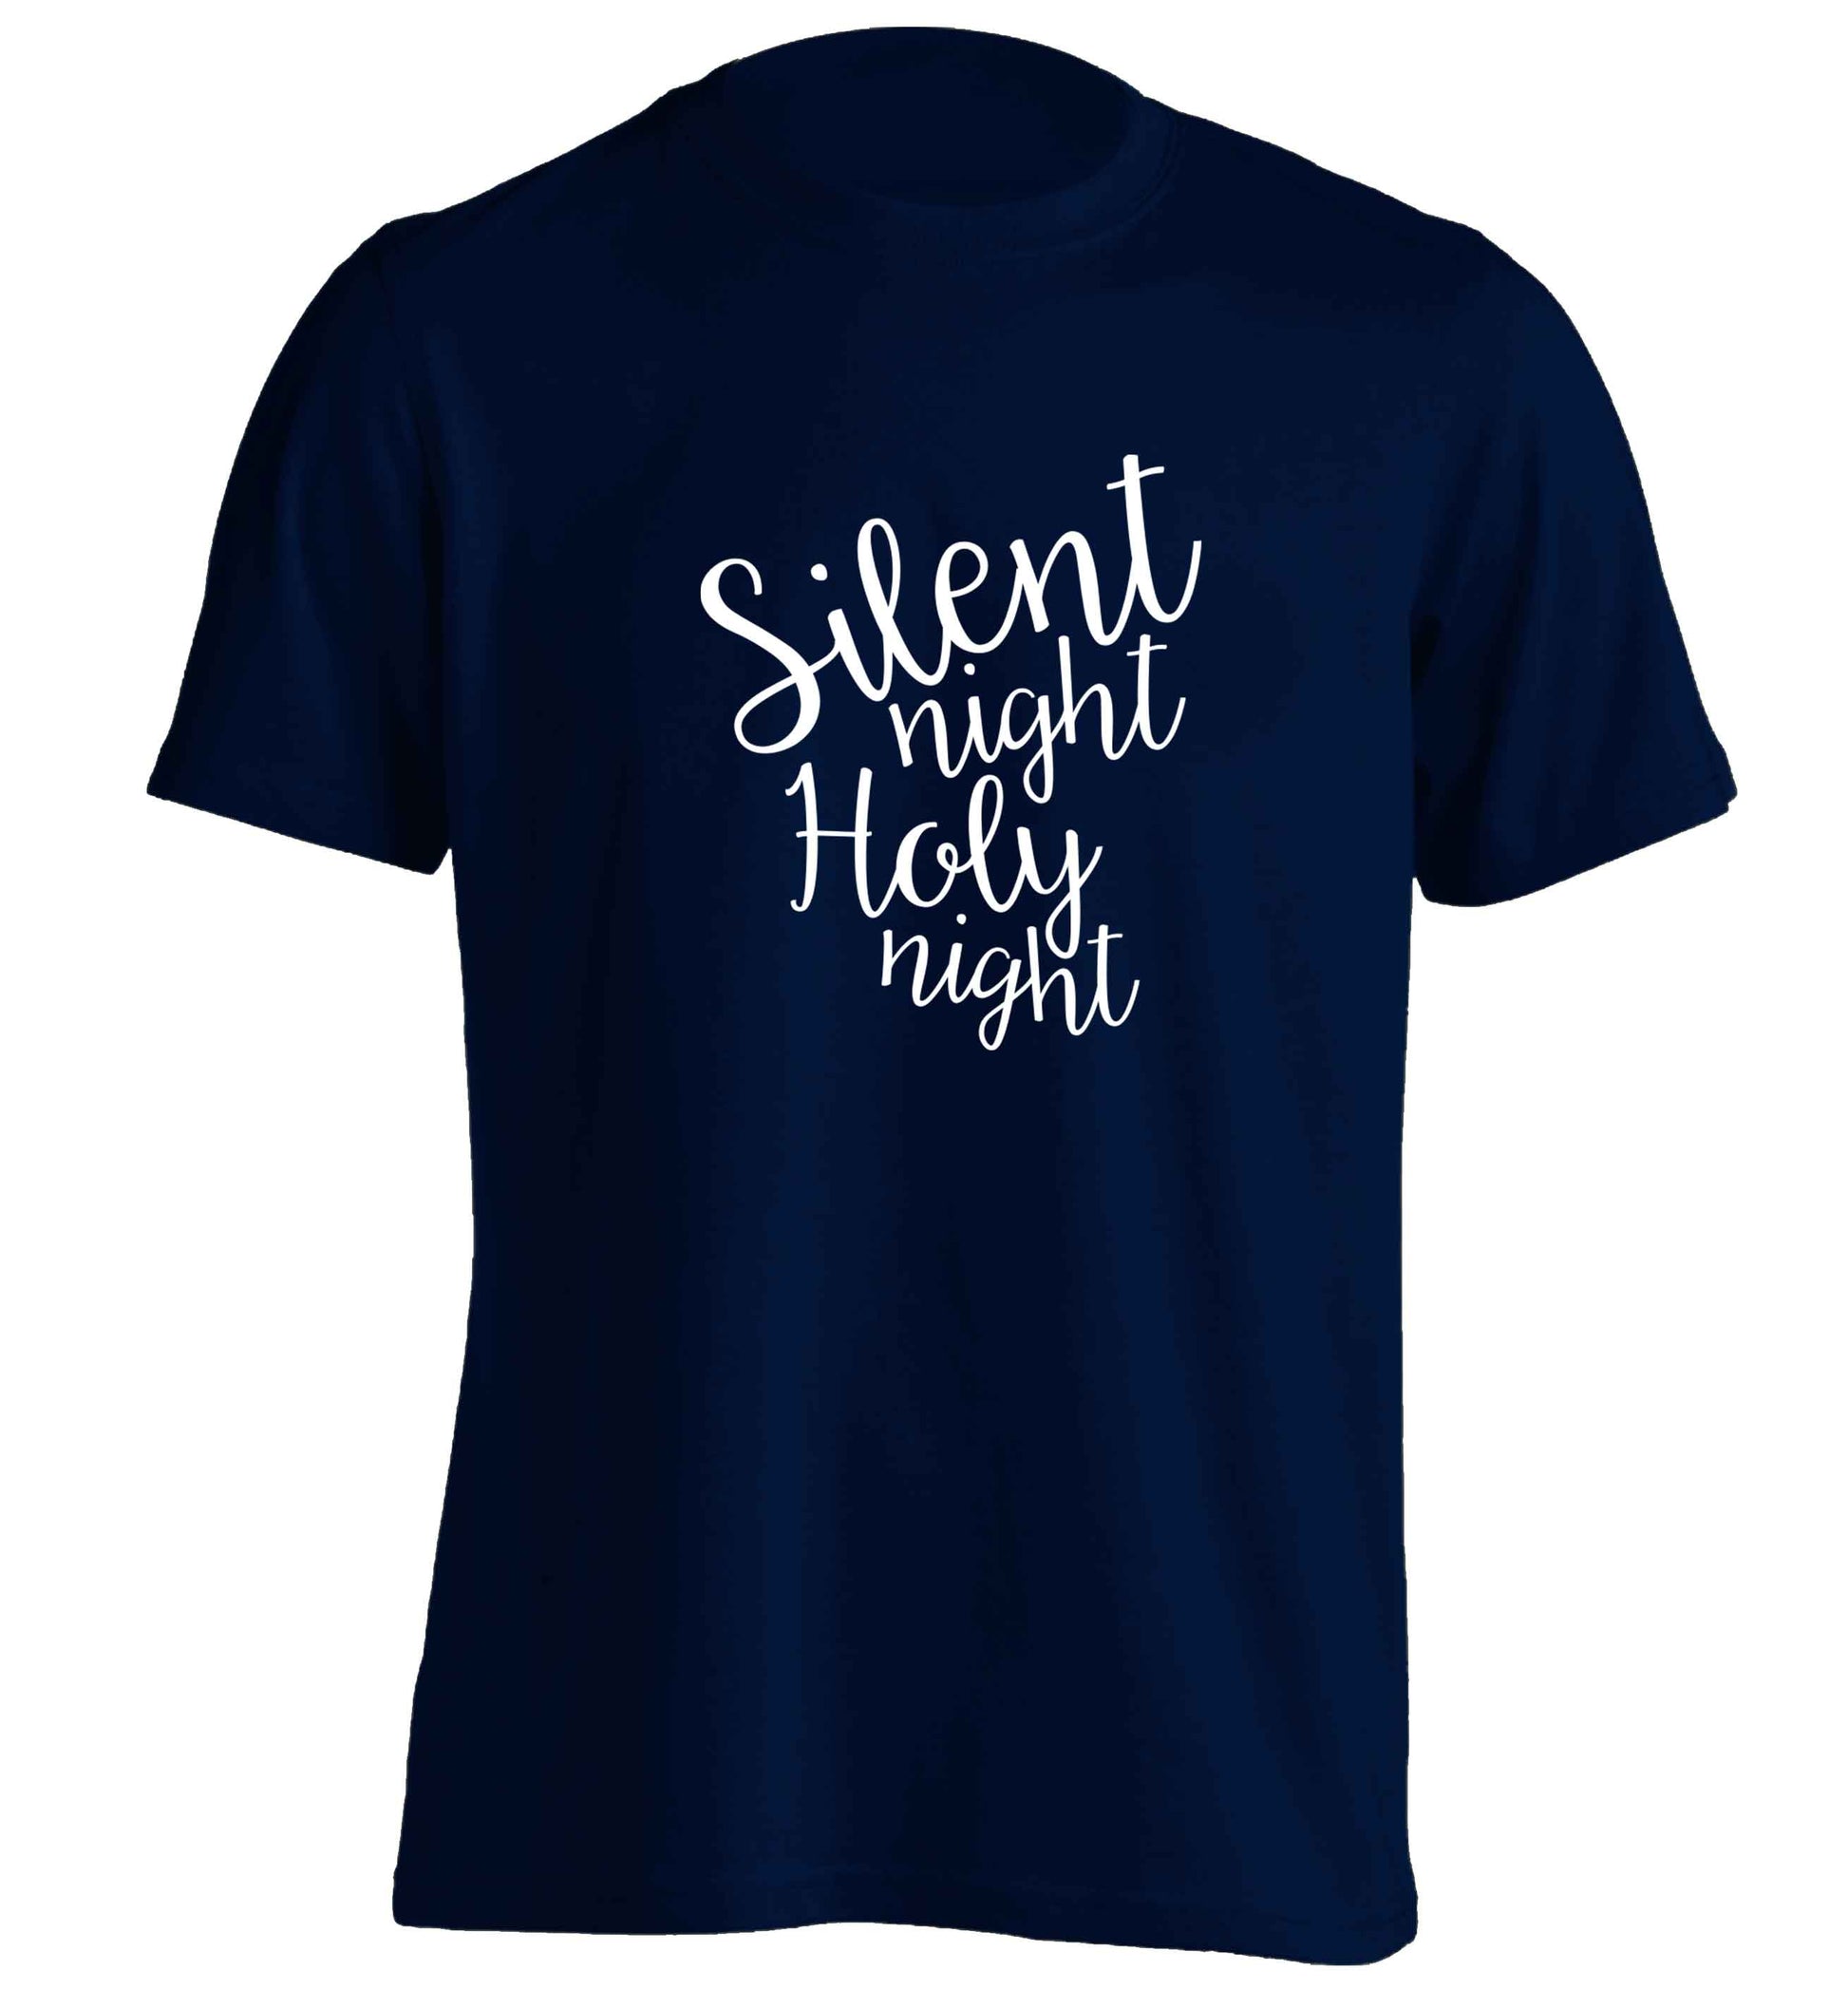 Silent night holy night adults unisex navy Tshirt 2XL